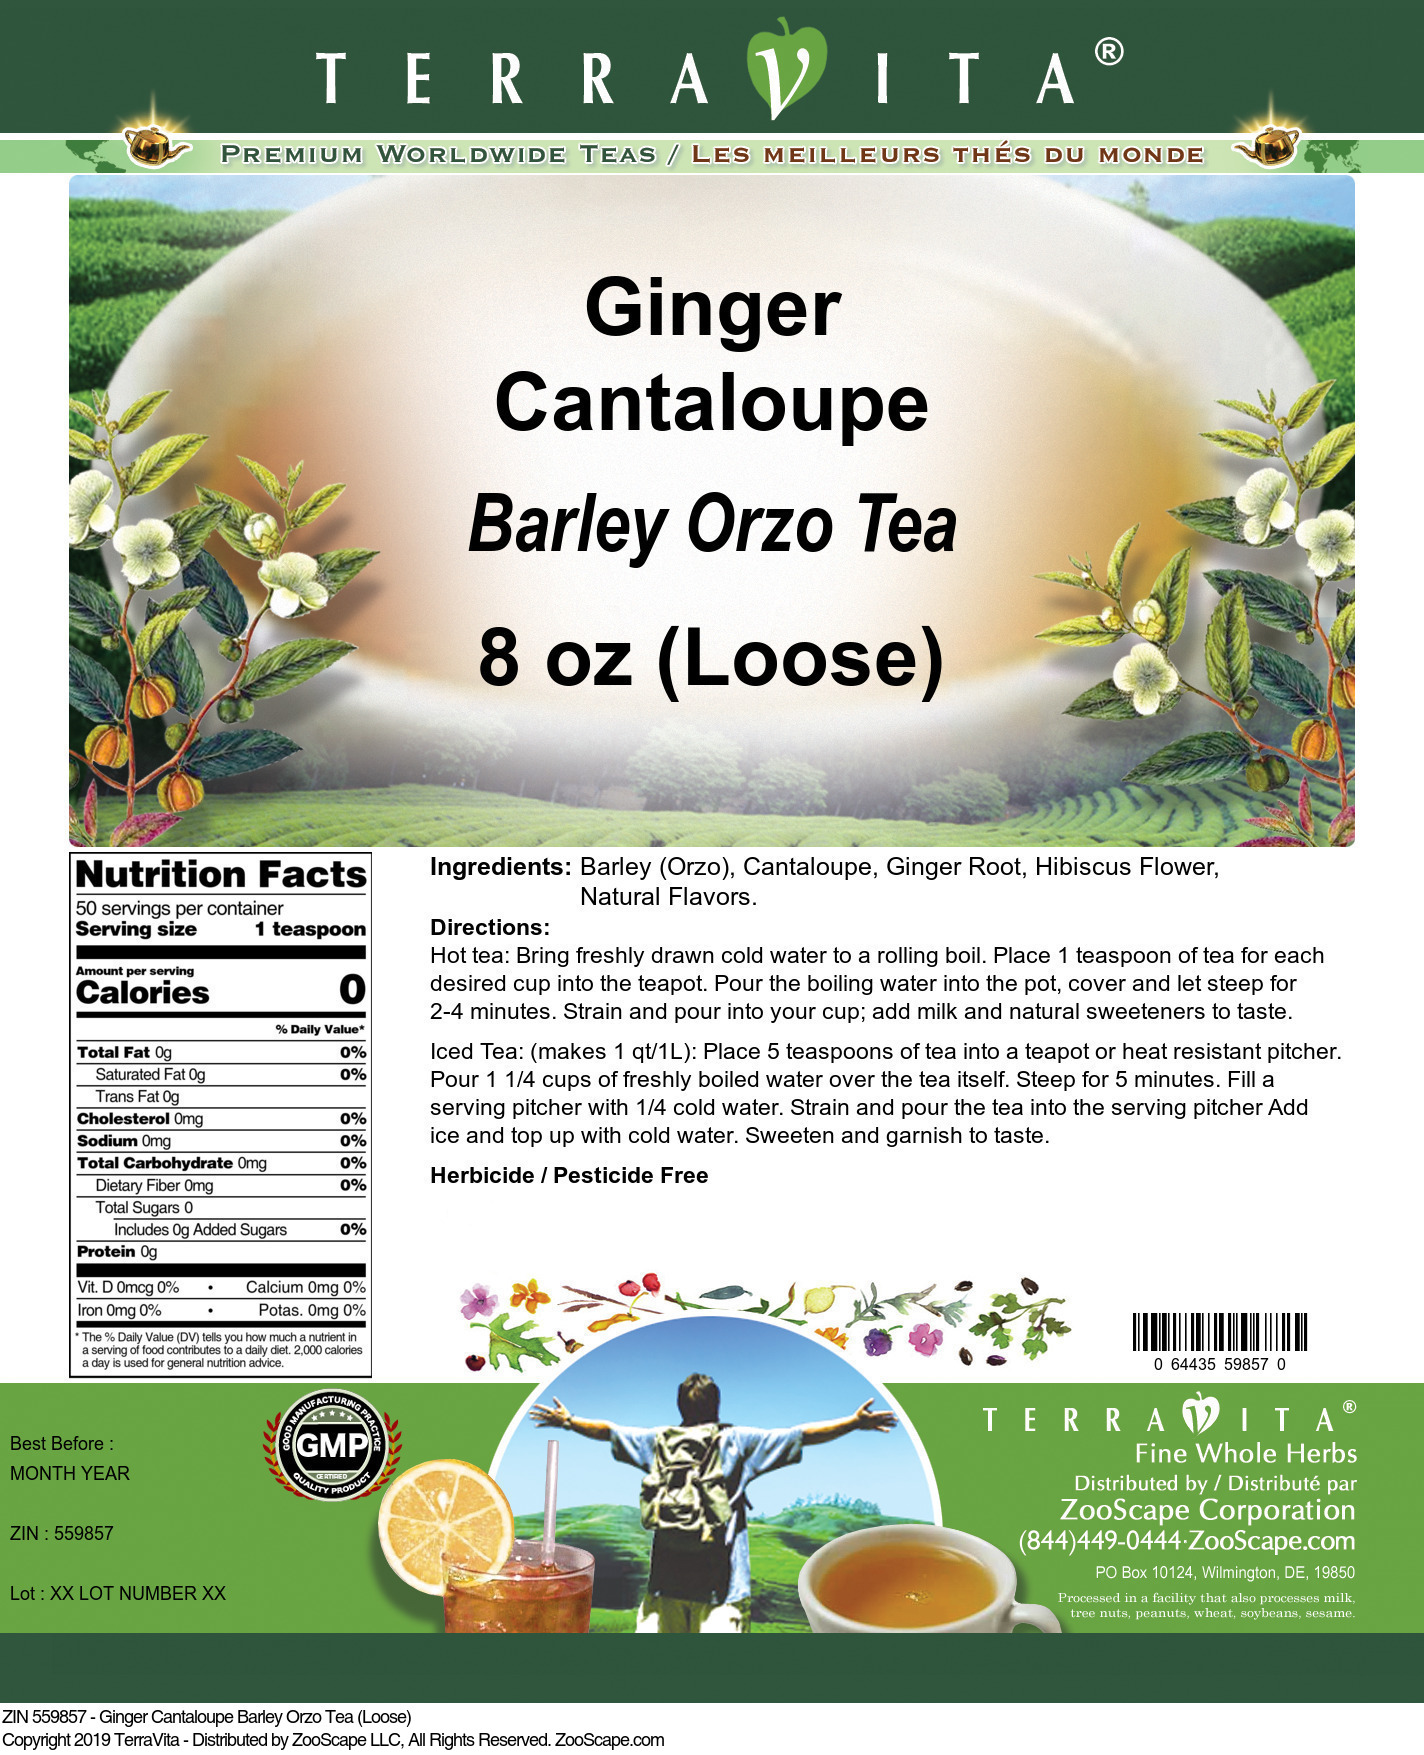 Ginger Cantaloupe Barley Orzo Tea (Loose) - Label